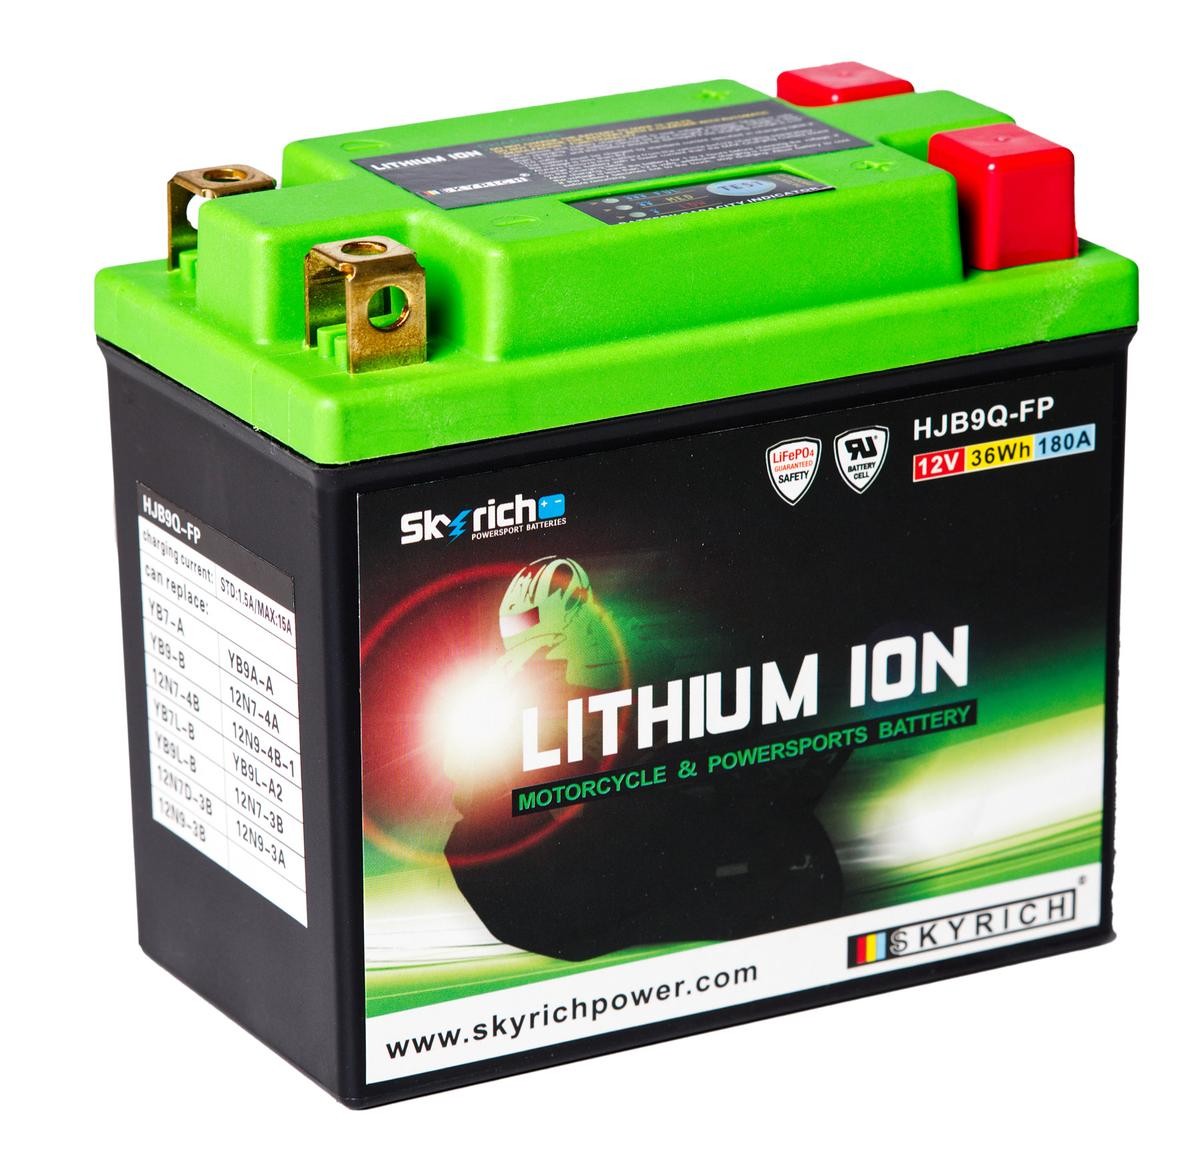 DAELIM VS Batterie 12V 3Ah 180A N Li-Ionen-Batterie SKYRICH LITHIUM ION HJB9Q-FP